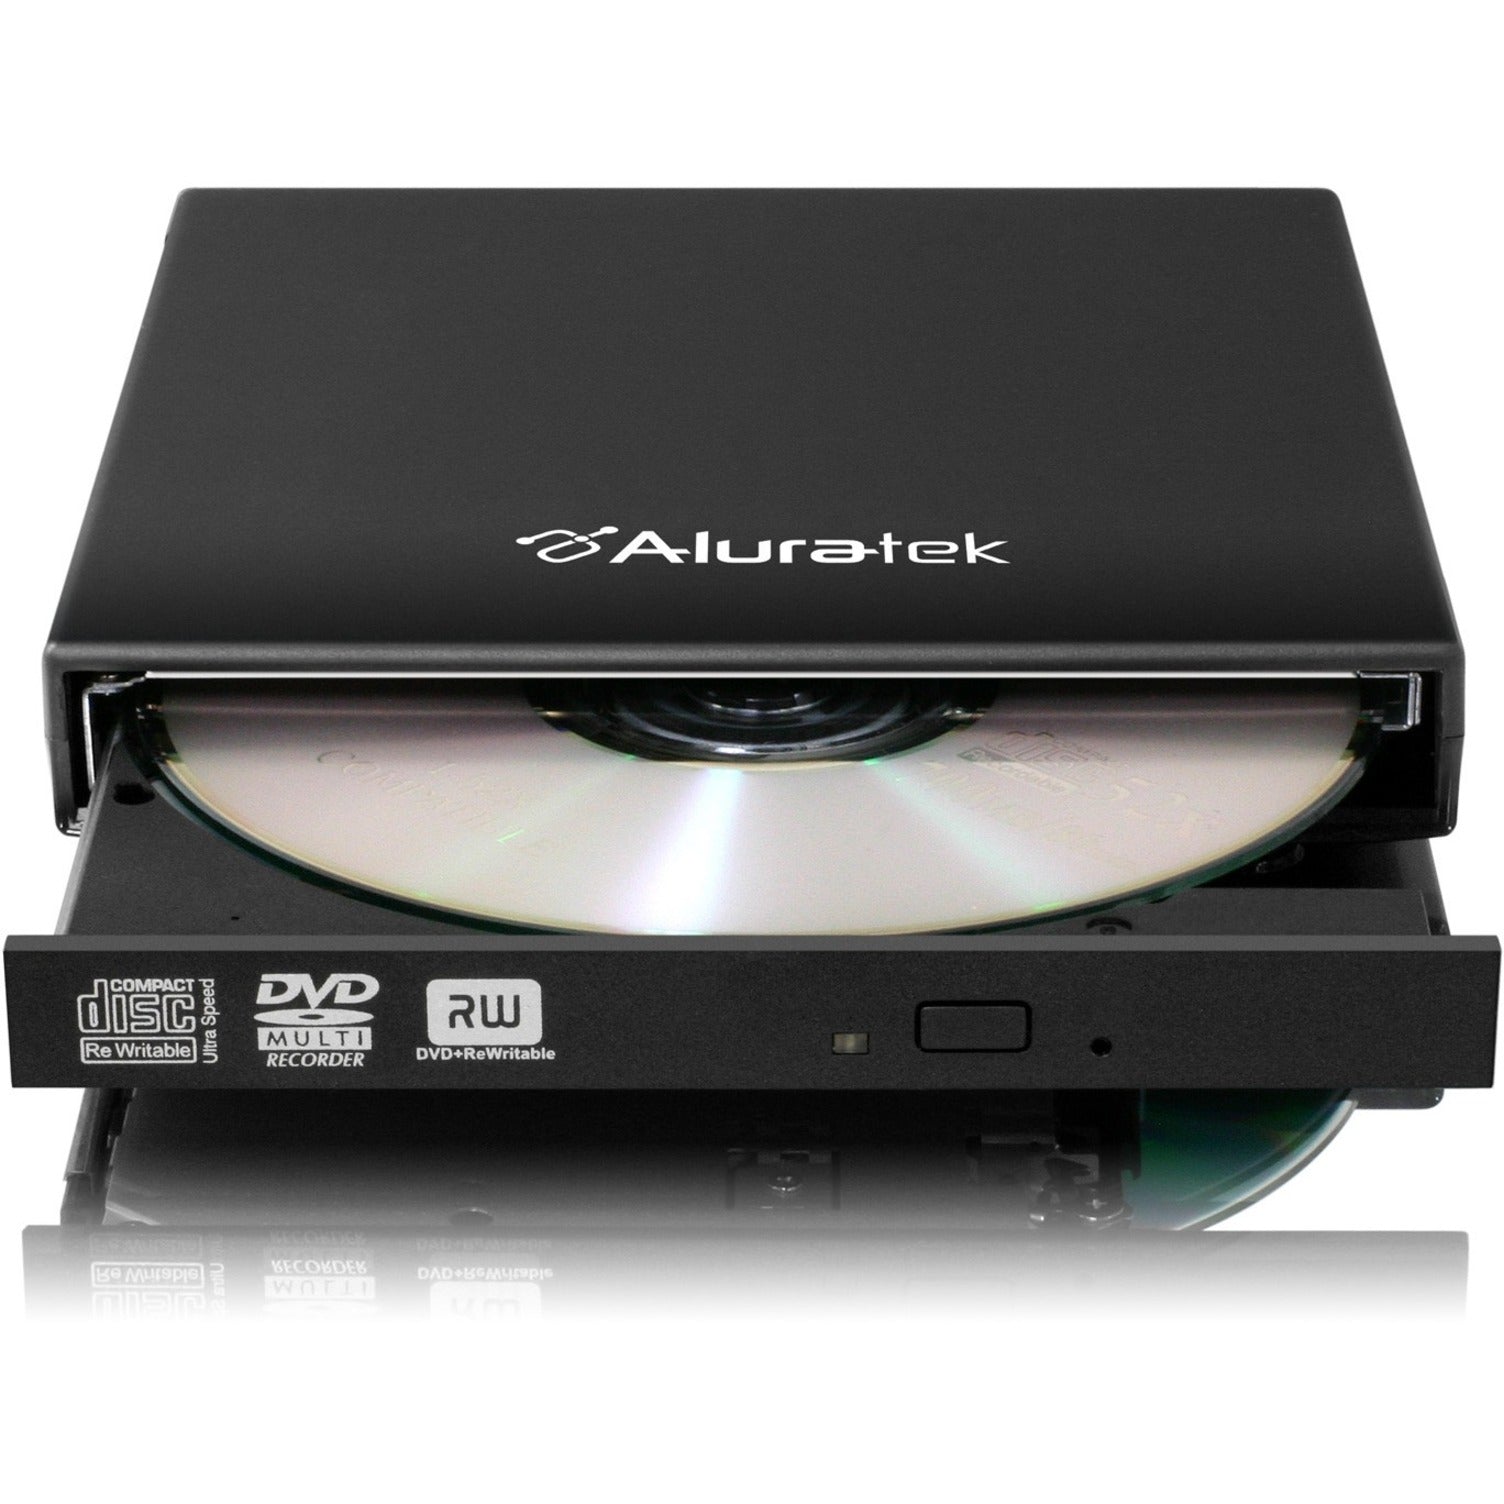 Aluratek AEOD100F 8x DVD, External DVD-Writer, USB 2.0, Double-layer Support